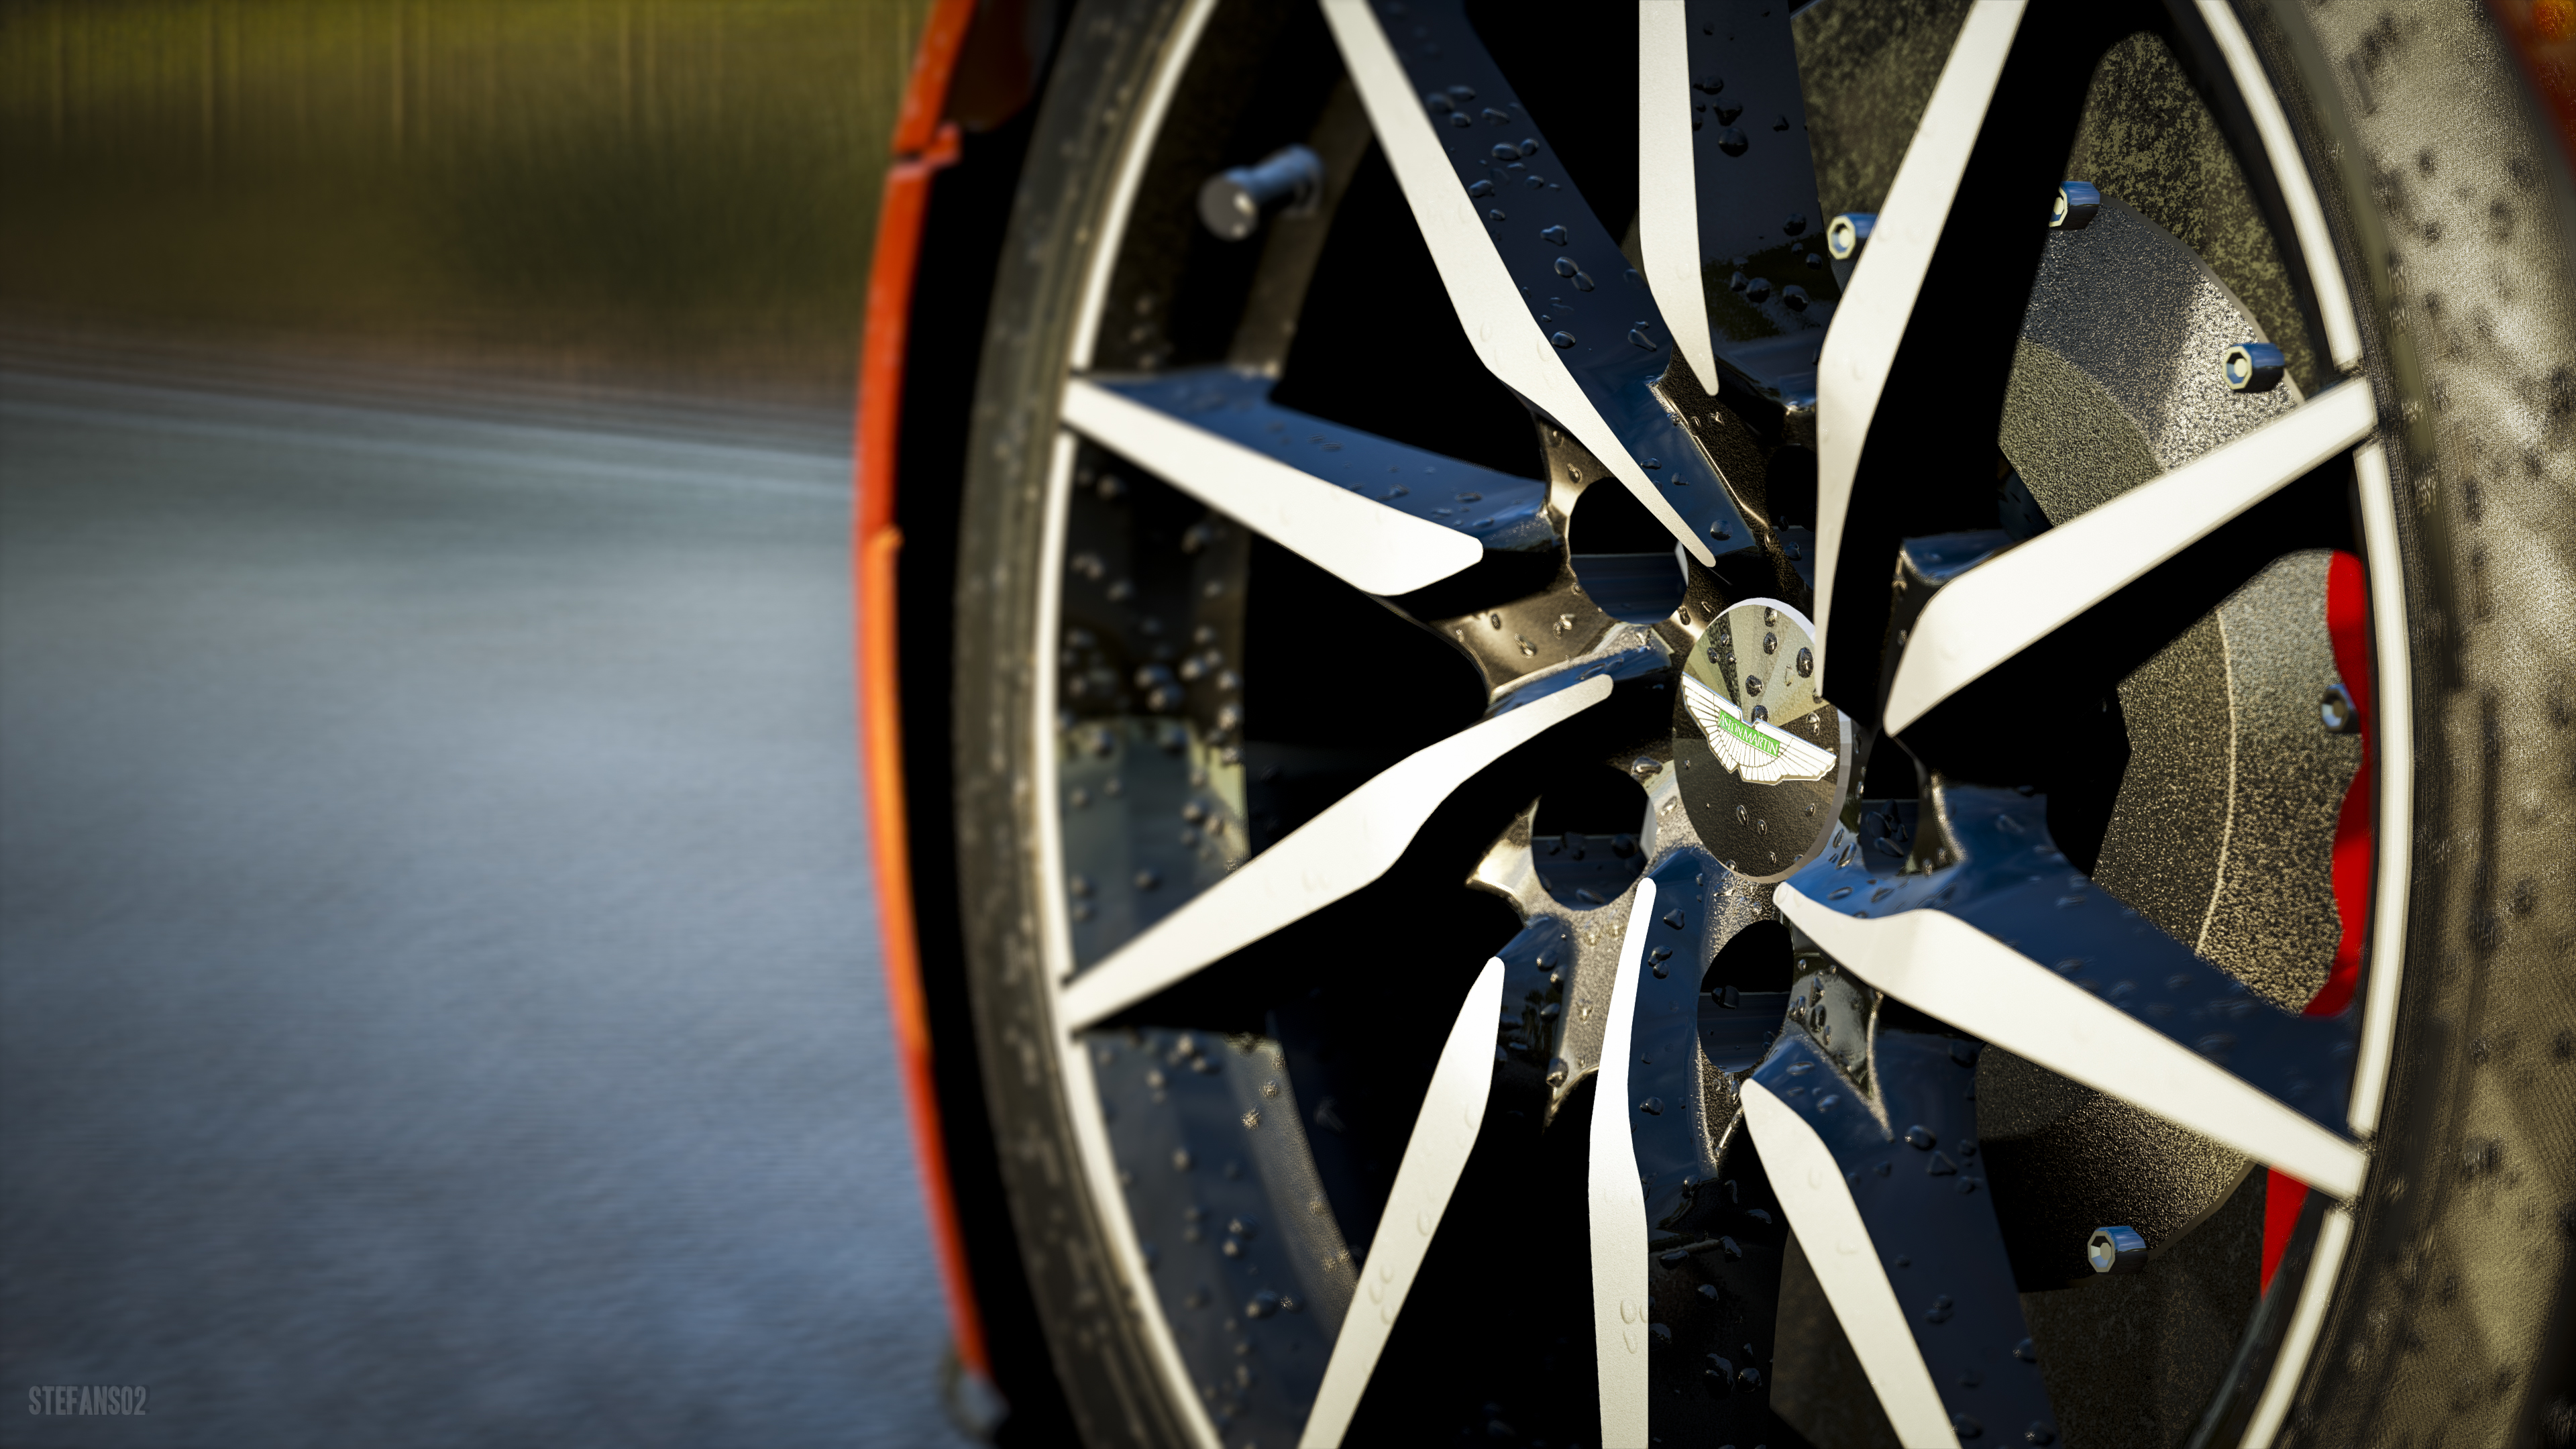 Forza Horizon 3 / Aston Martin DB11 Wheel by StefanS02